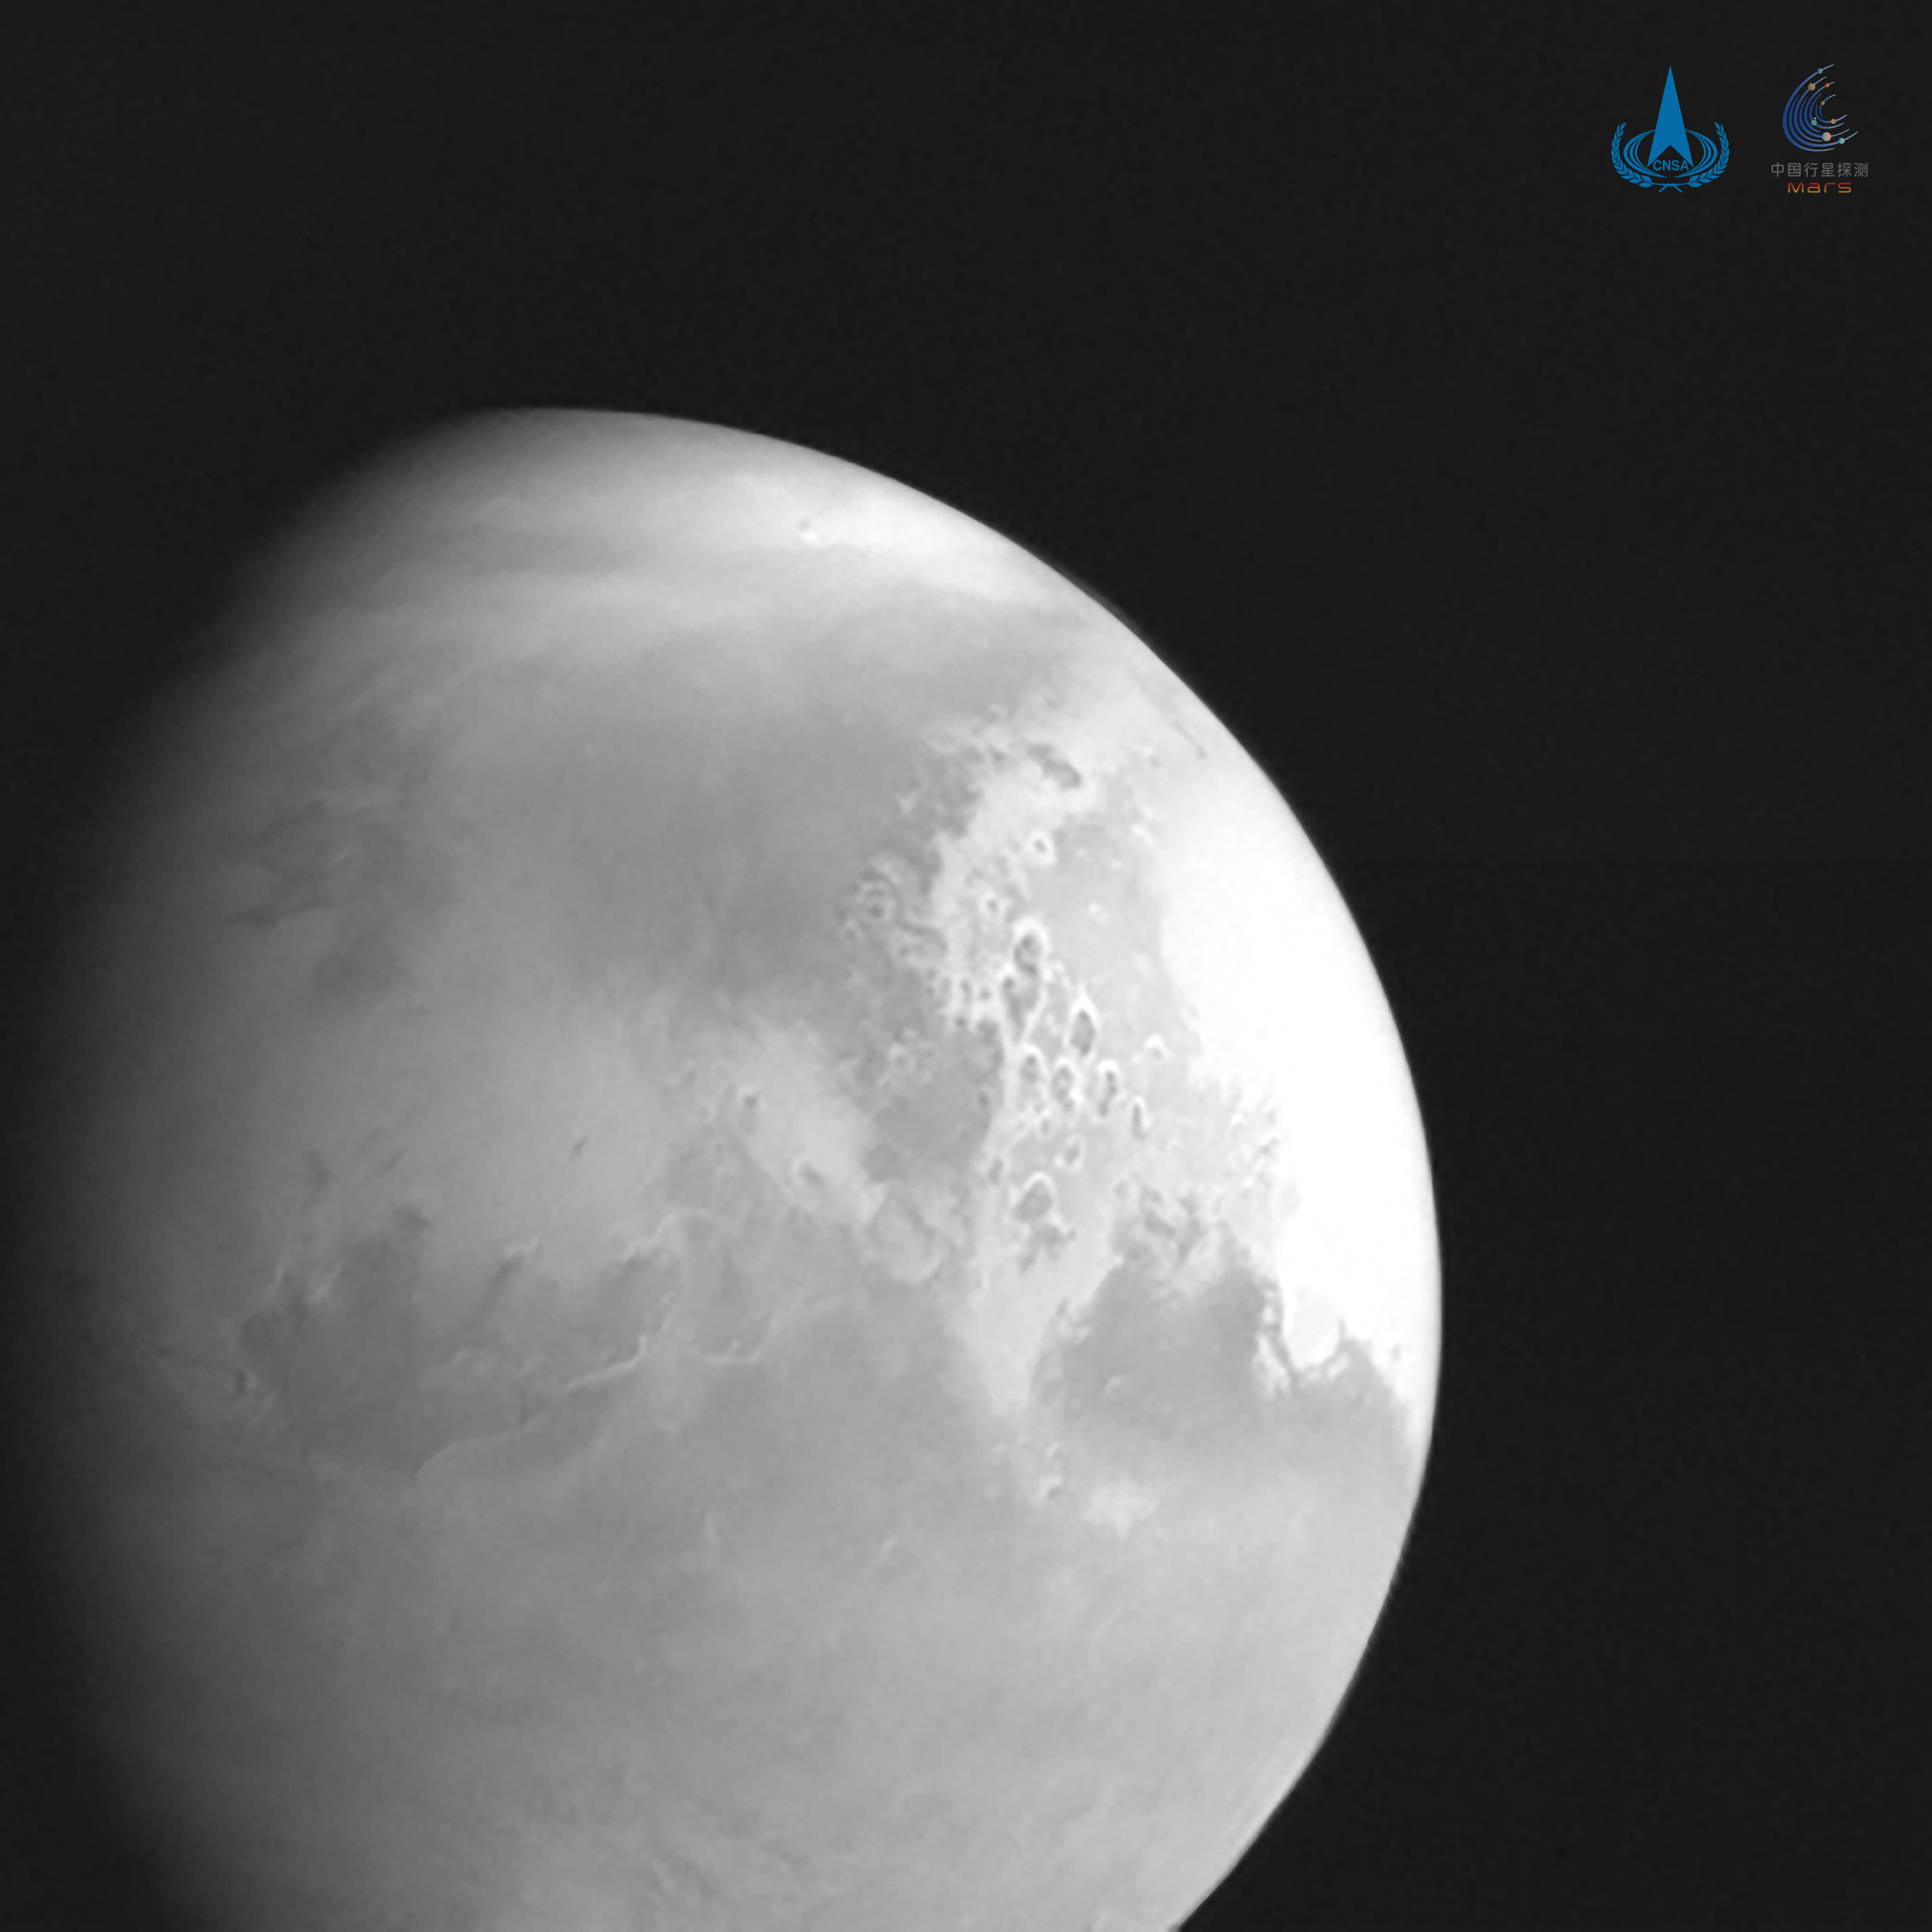 Mars (Photo: CNSA.GOV.CN)